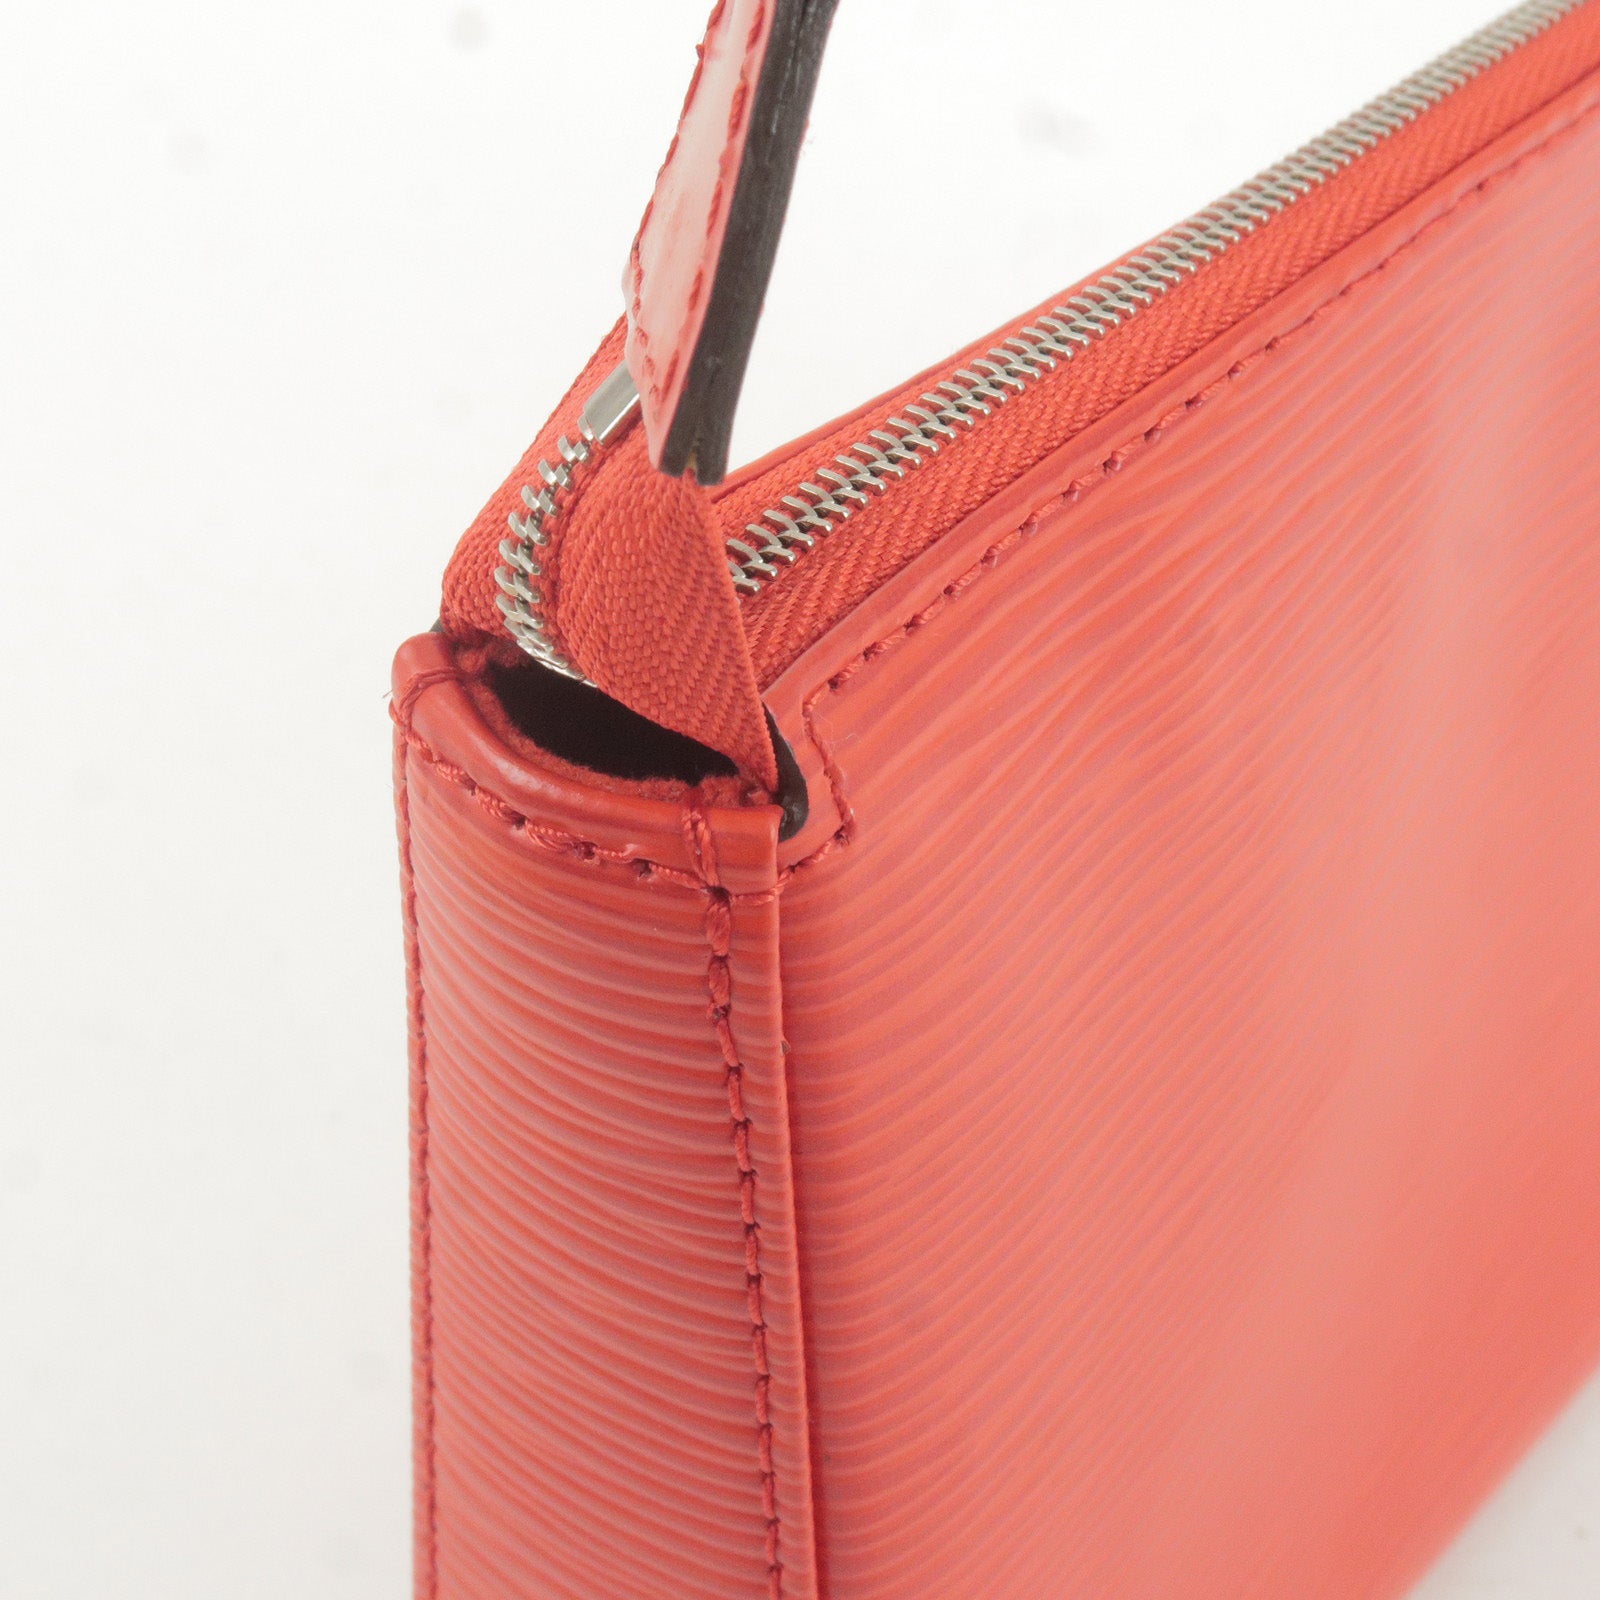 Louis Vuitton Orange Patent Leather Lv Initiales Clutch Bag